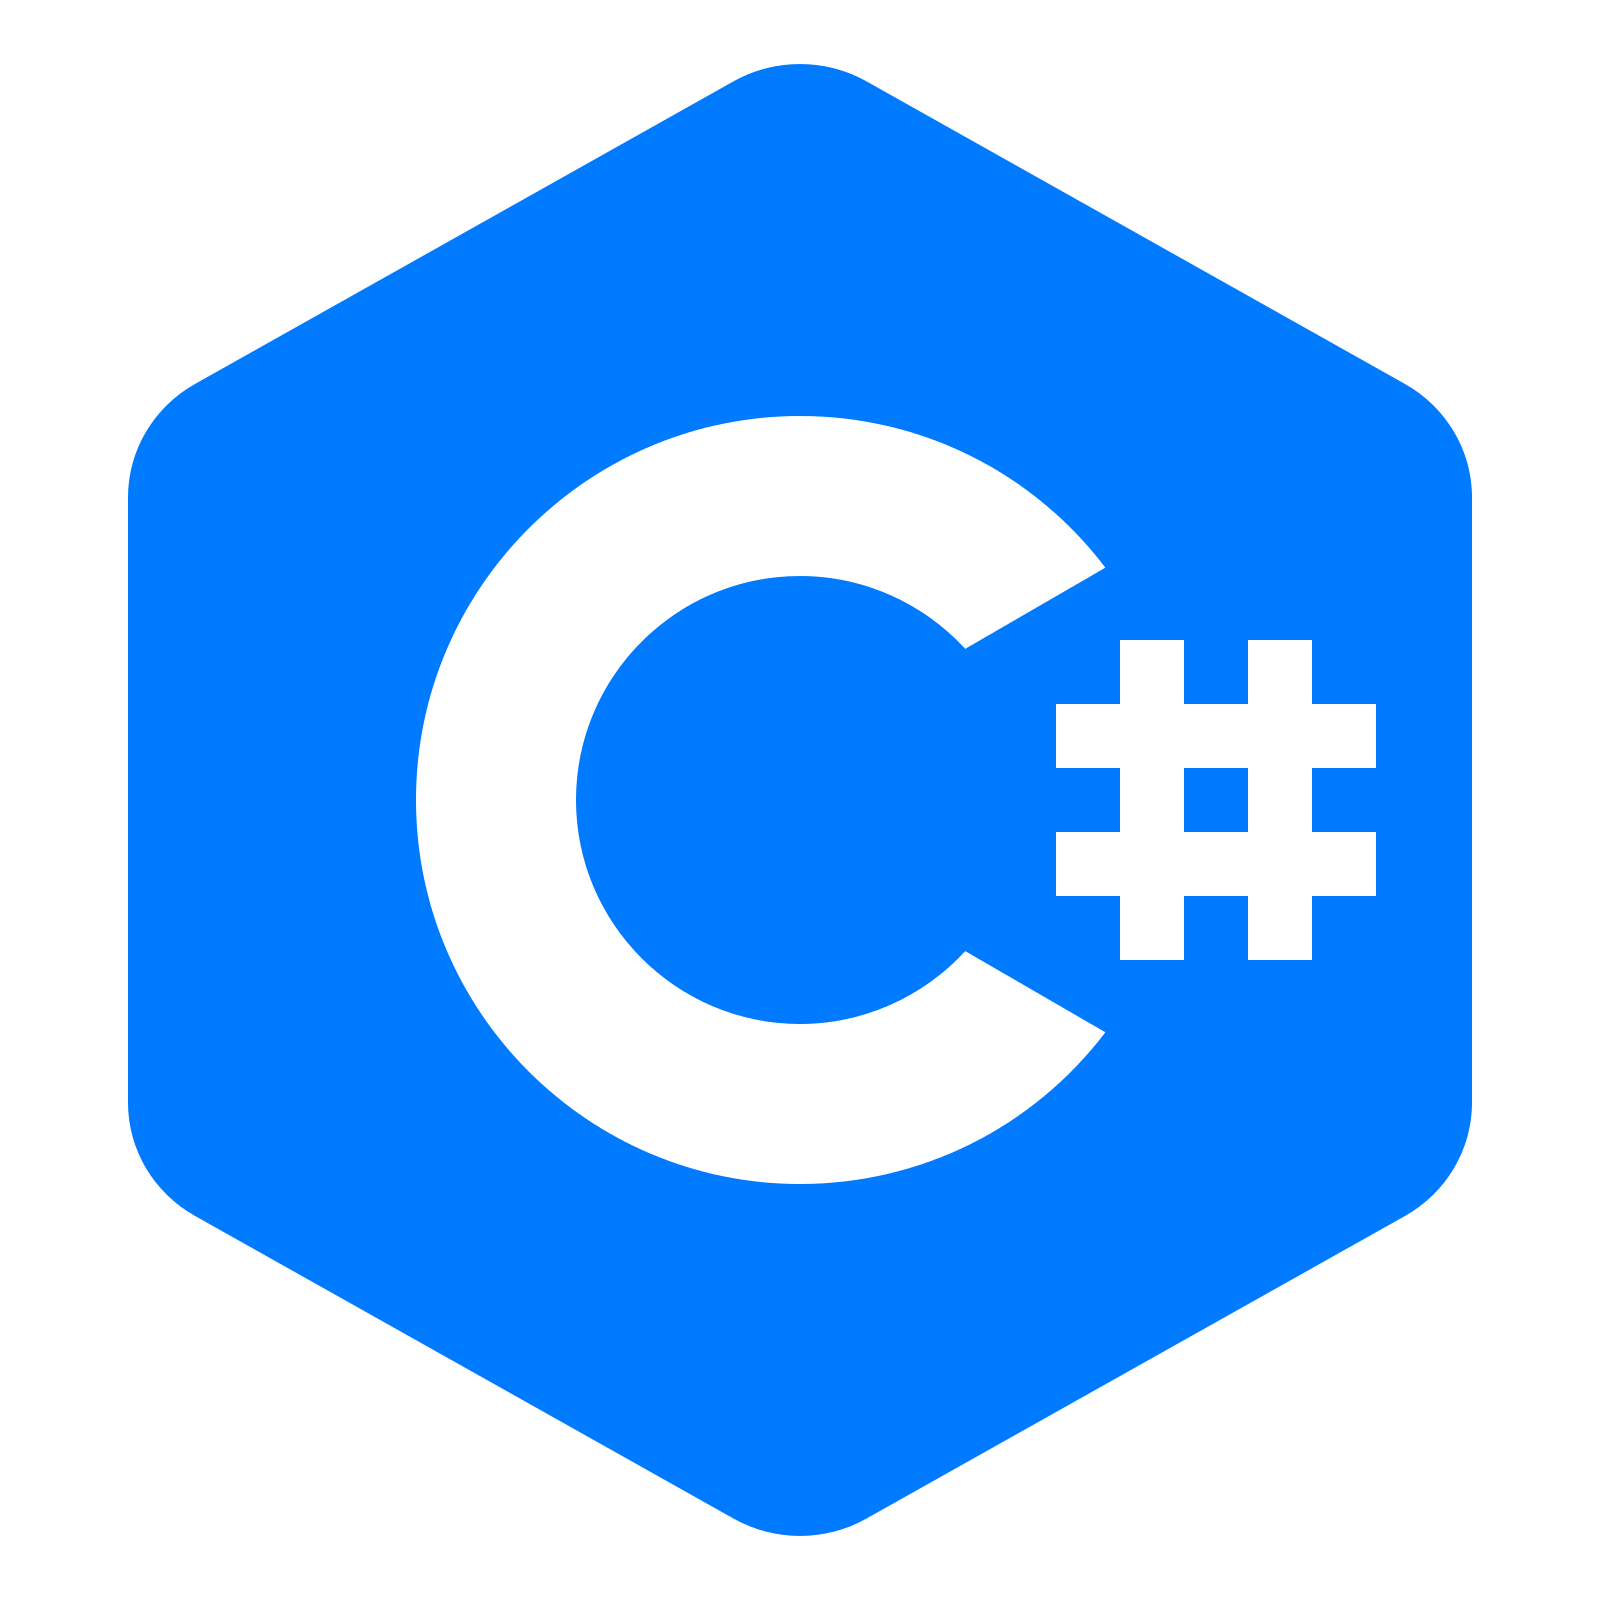 C Sharp Logo - Best C# Programming Books for Beginners and Advanced Developers